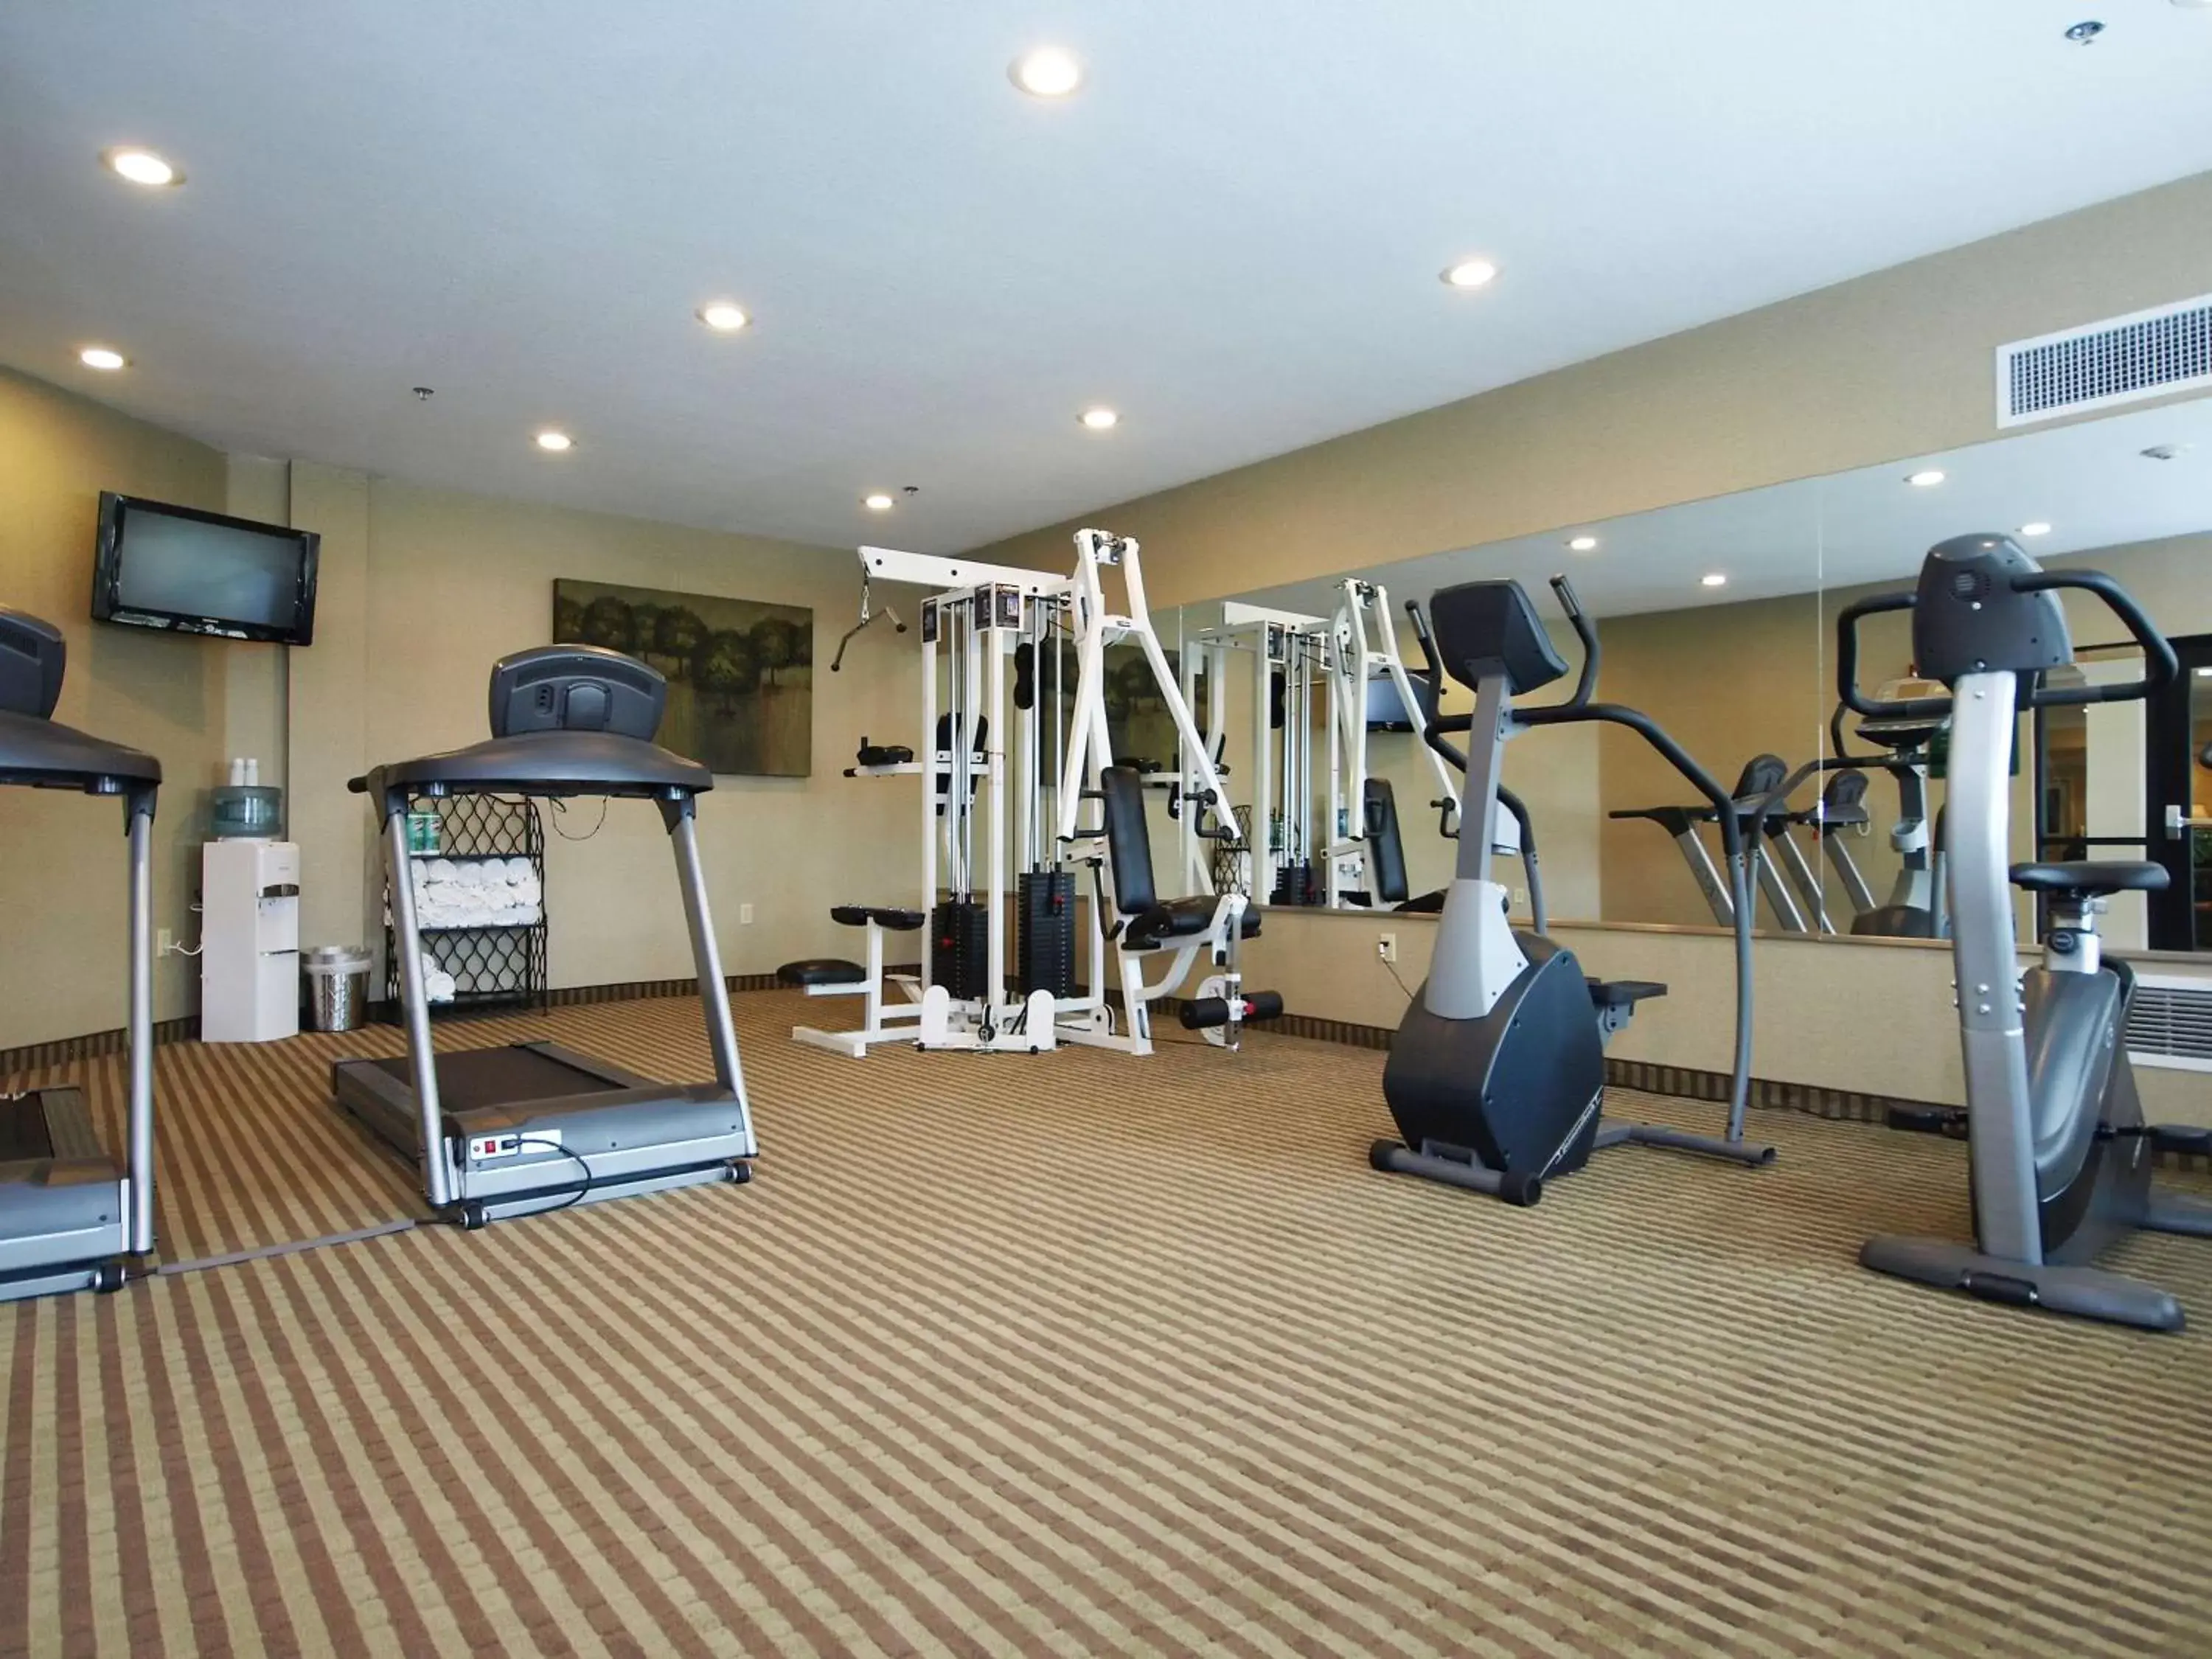 Fitness centre/facilities, Fitness Center/Facilities in Best Western Plus Valdosta Hotel & Suites